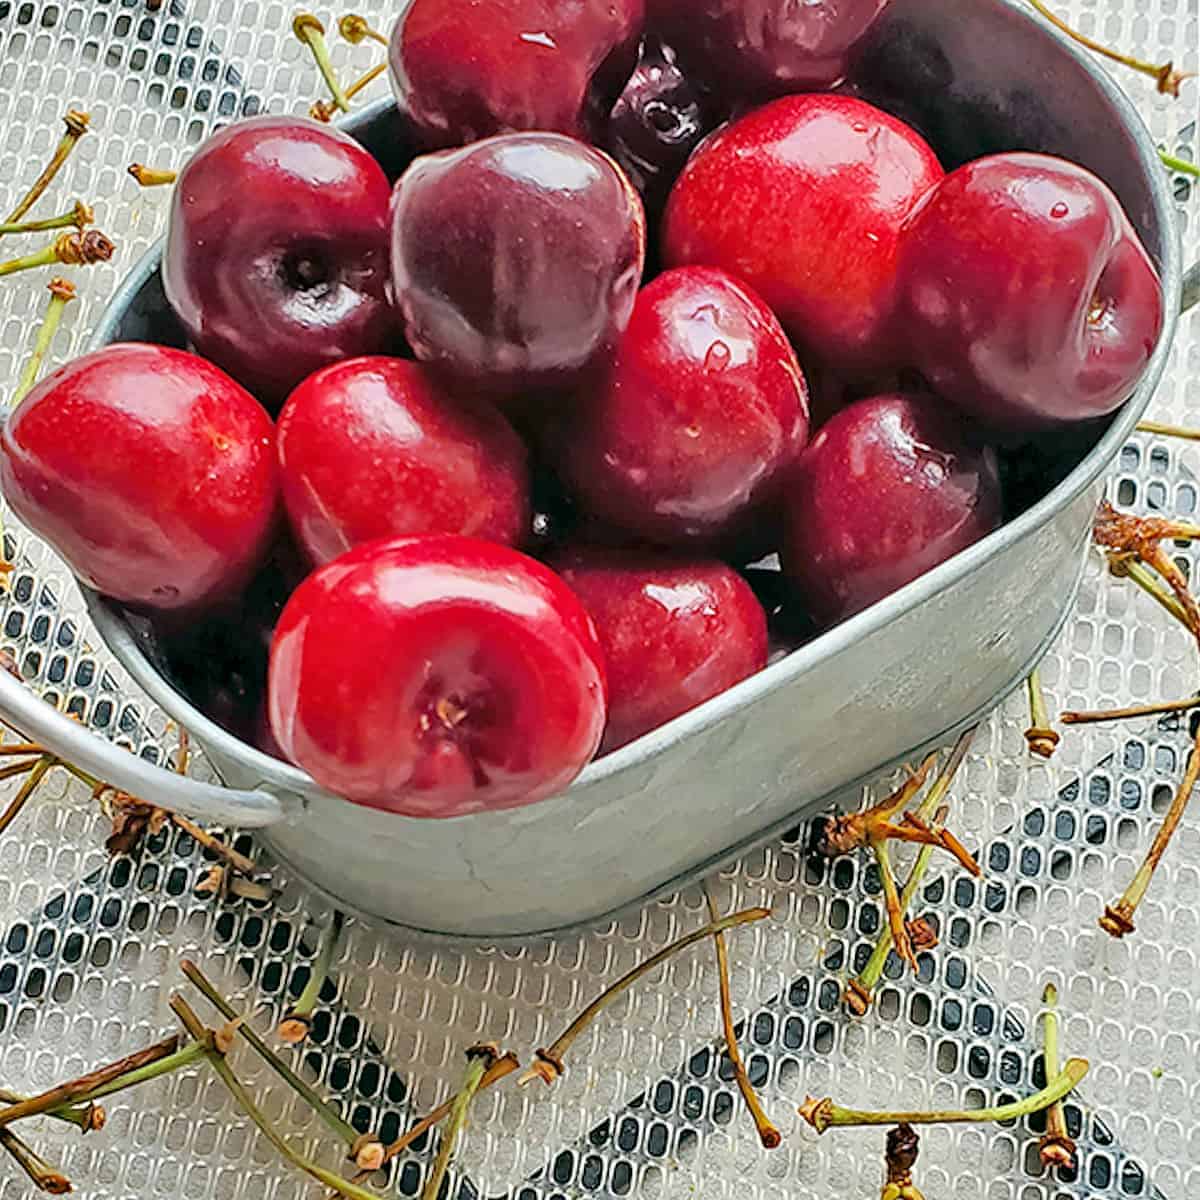 How To Make Cherry Juice (+ Pit Cherries